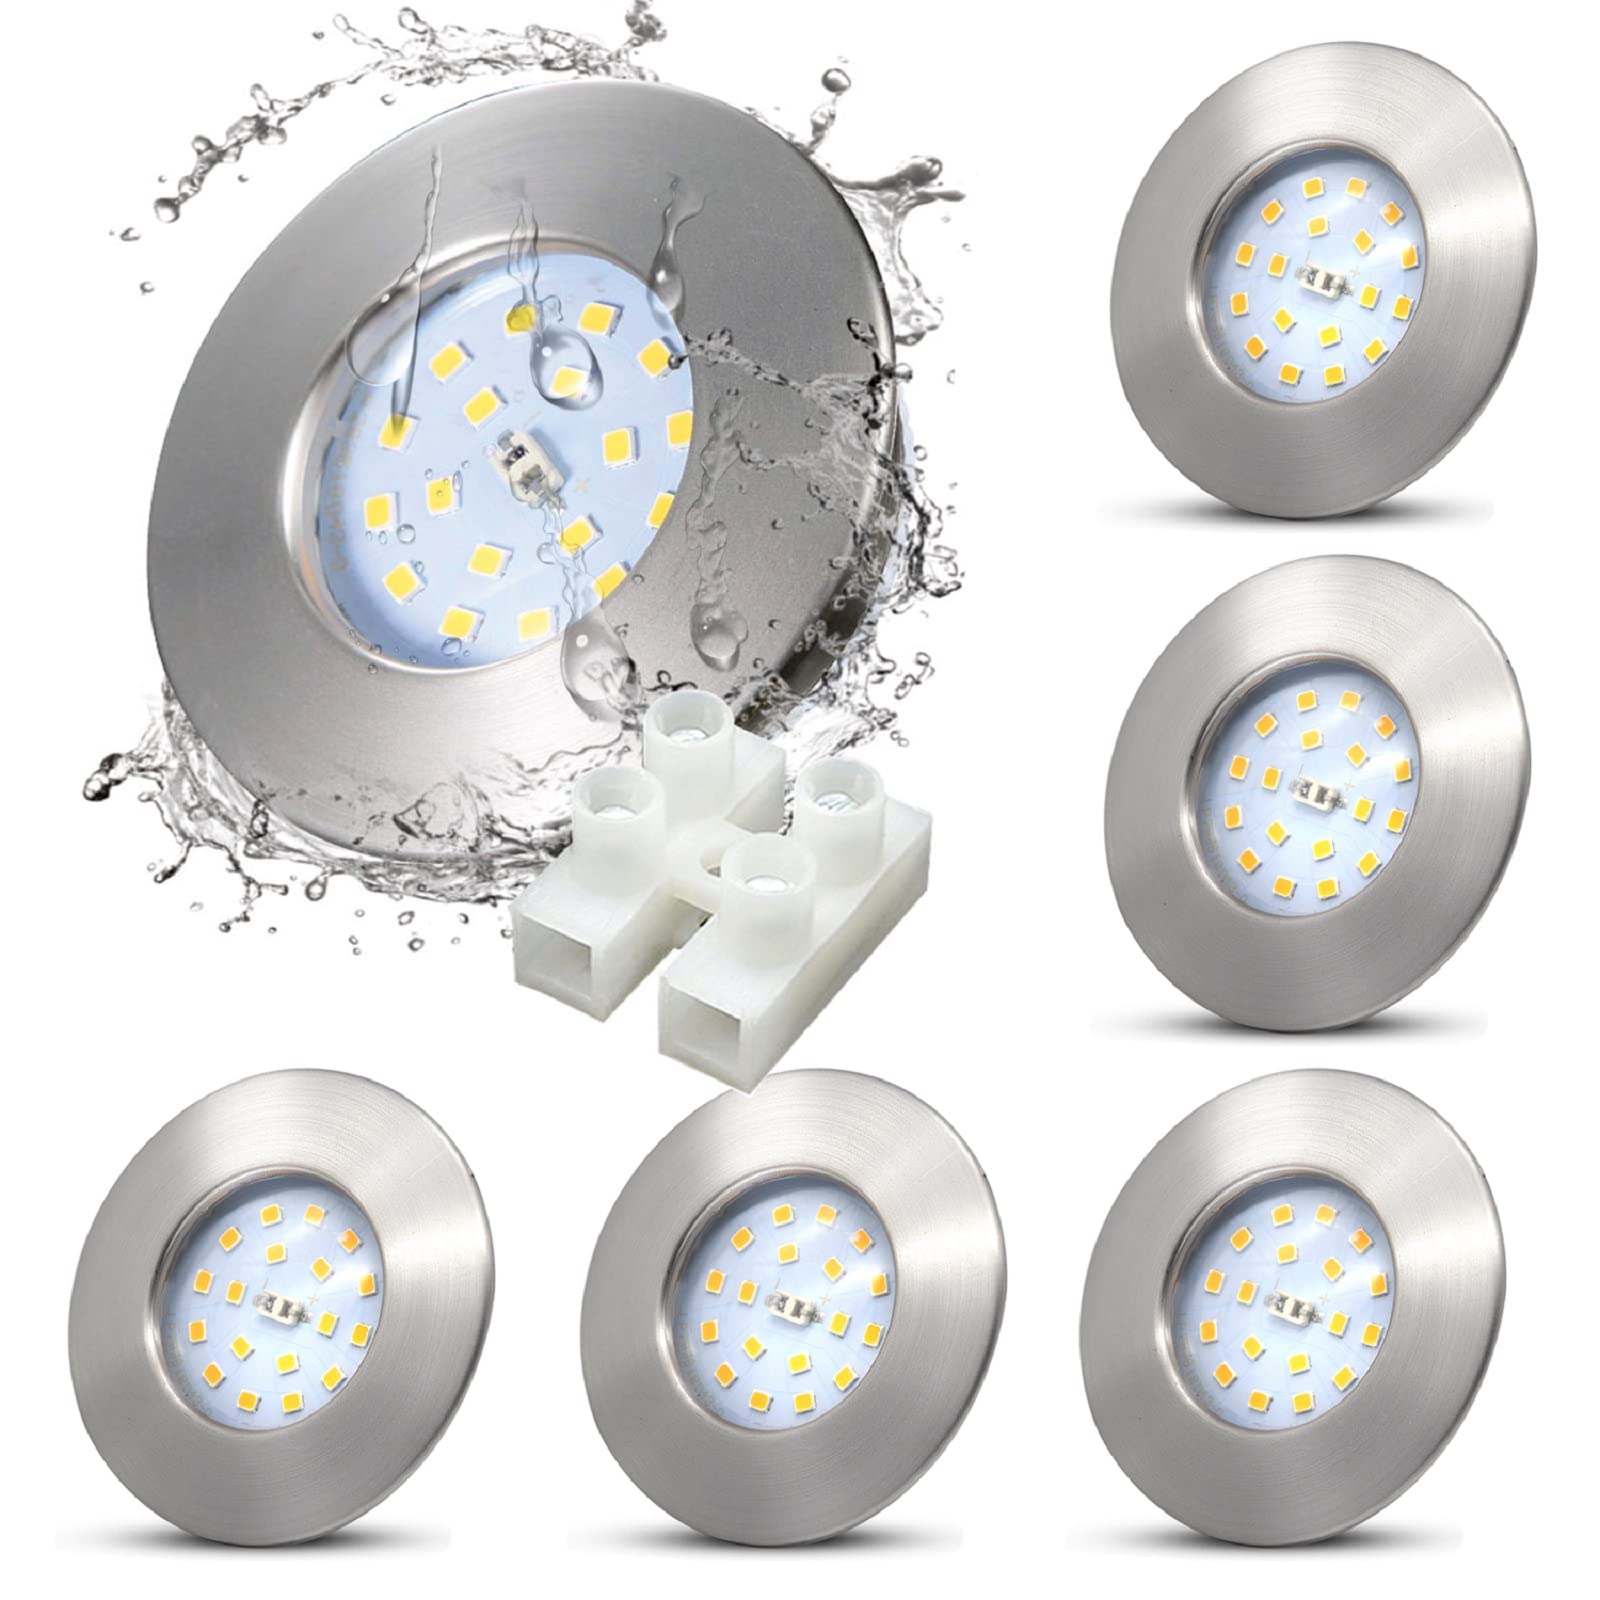 Allesgute LED IP44 Recessed Bathroom Ceiling Lights Ultra Slim Brushed Chrome Recessed Spot Light Cool White 5W 6000K(Pack of 6)